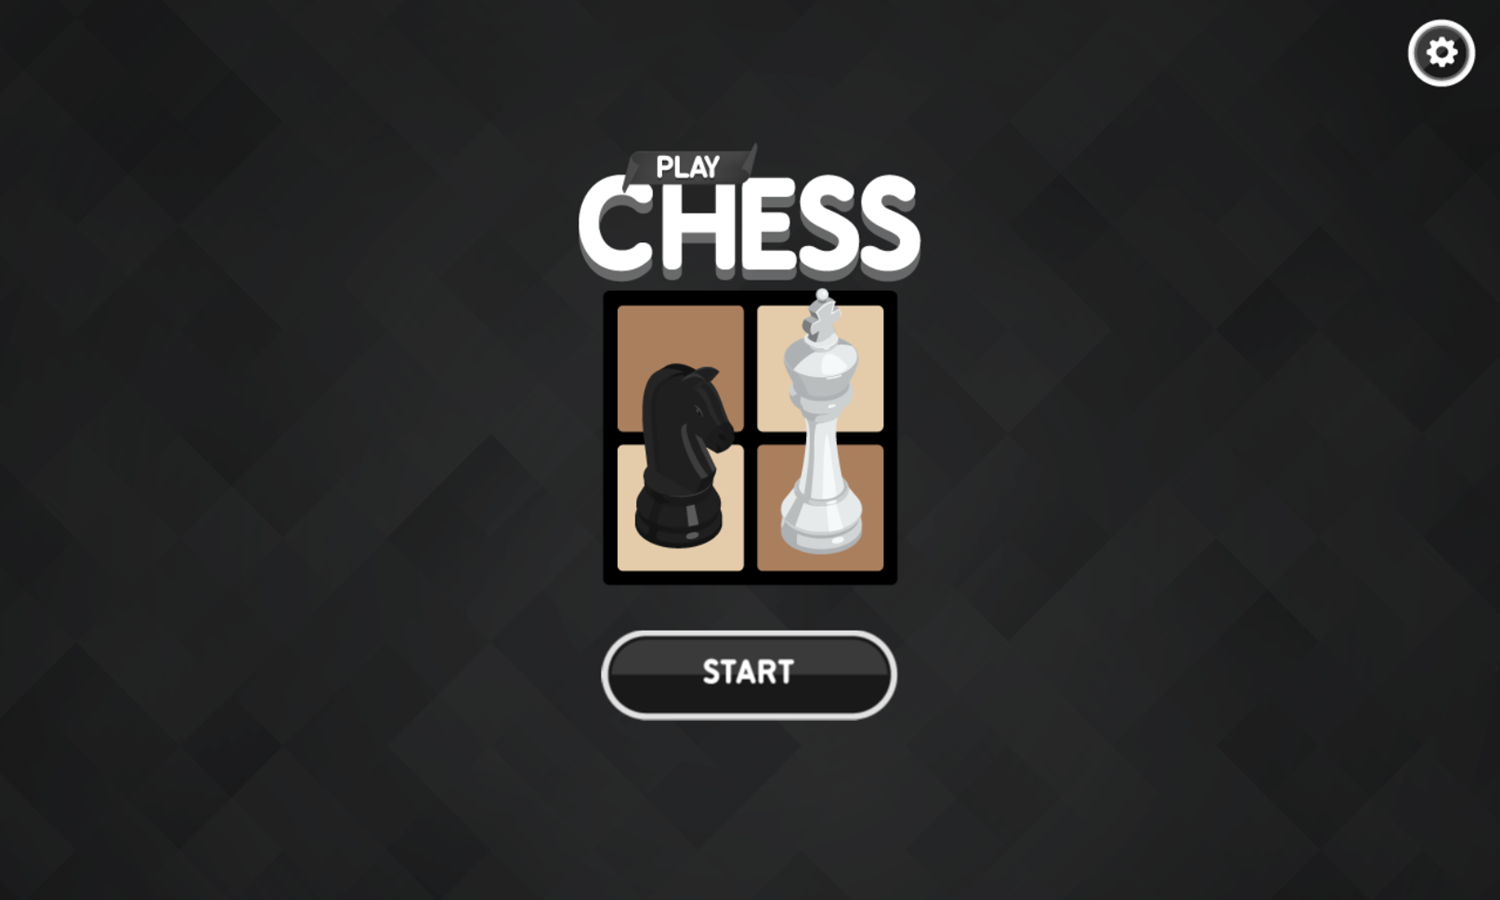 Play Chess Game Welcome Screen Screenshot.